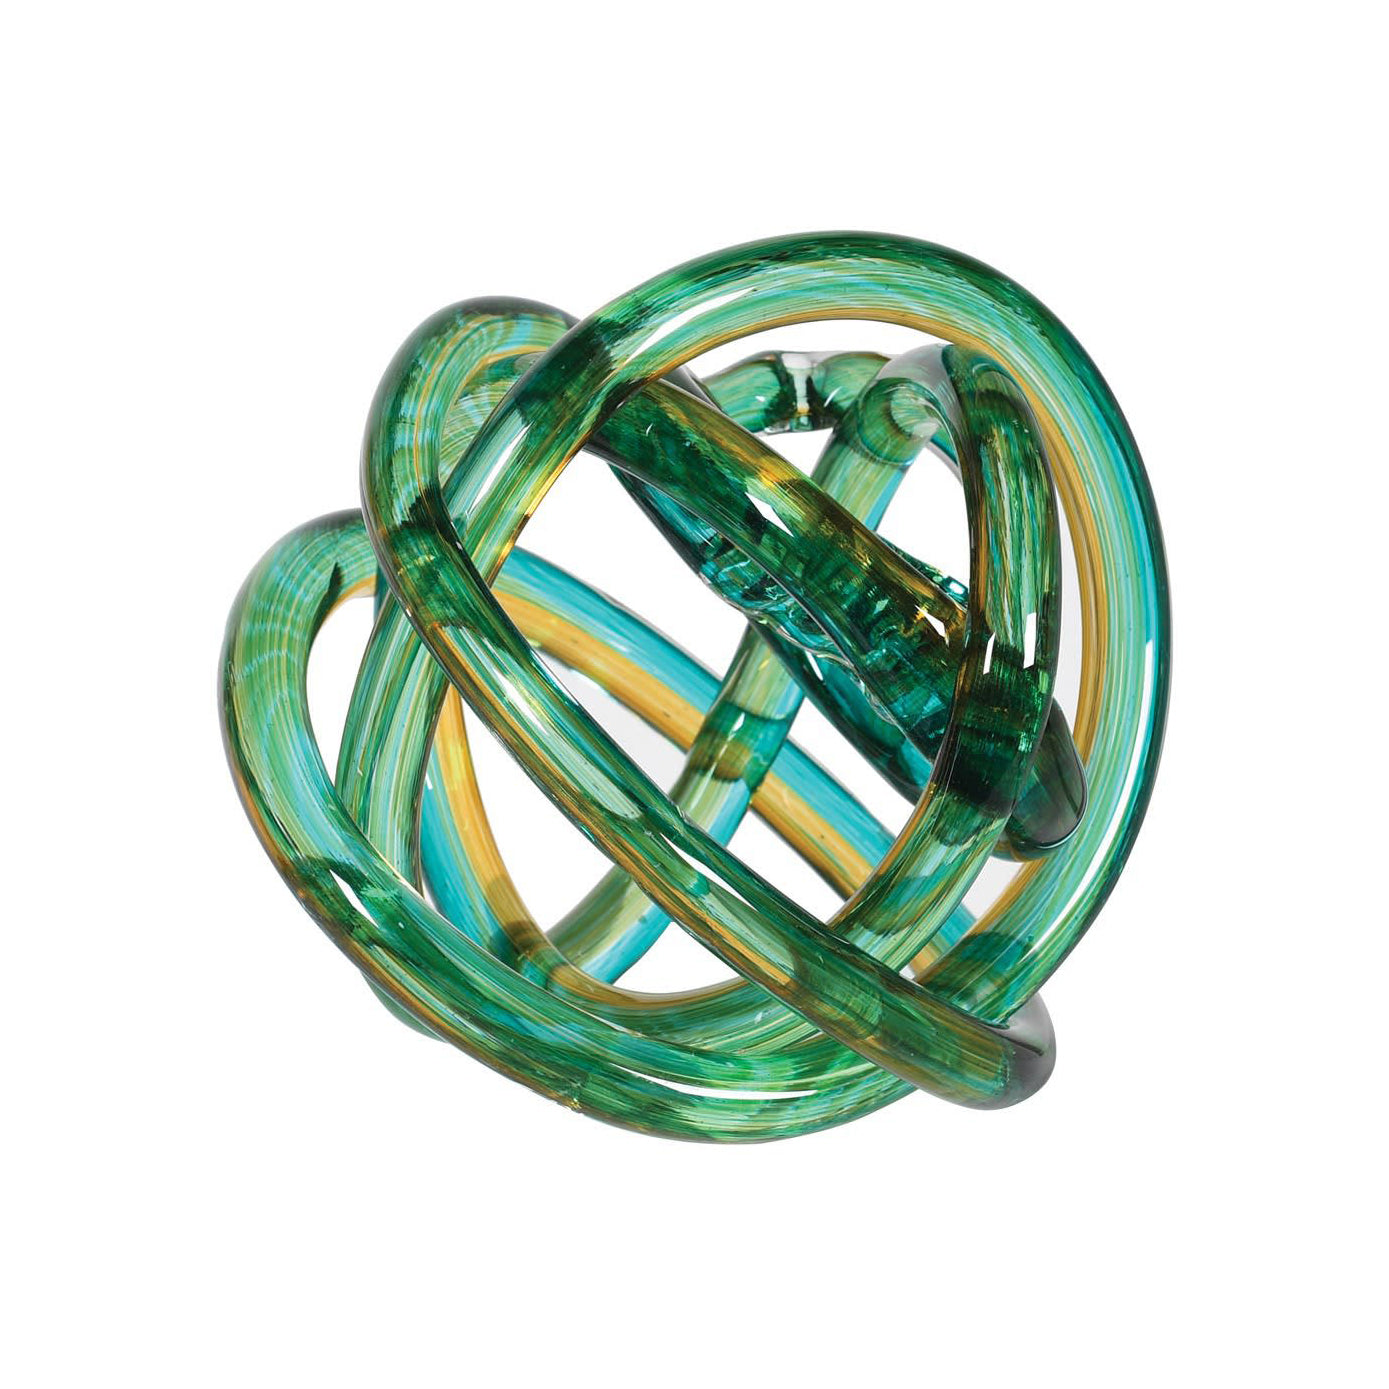 Green & Yellow Glass Knot Ornament Joanna Wood Shop